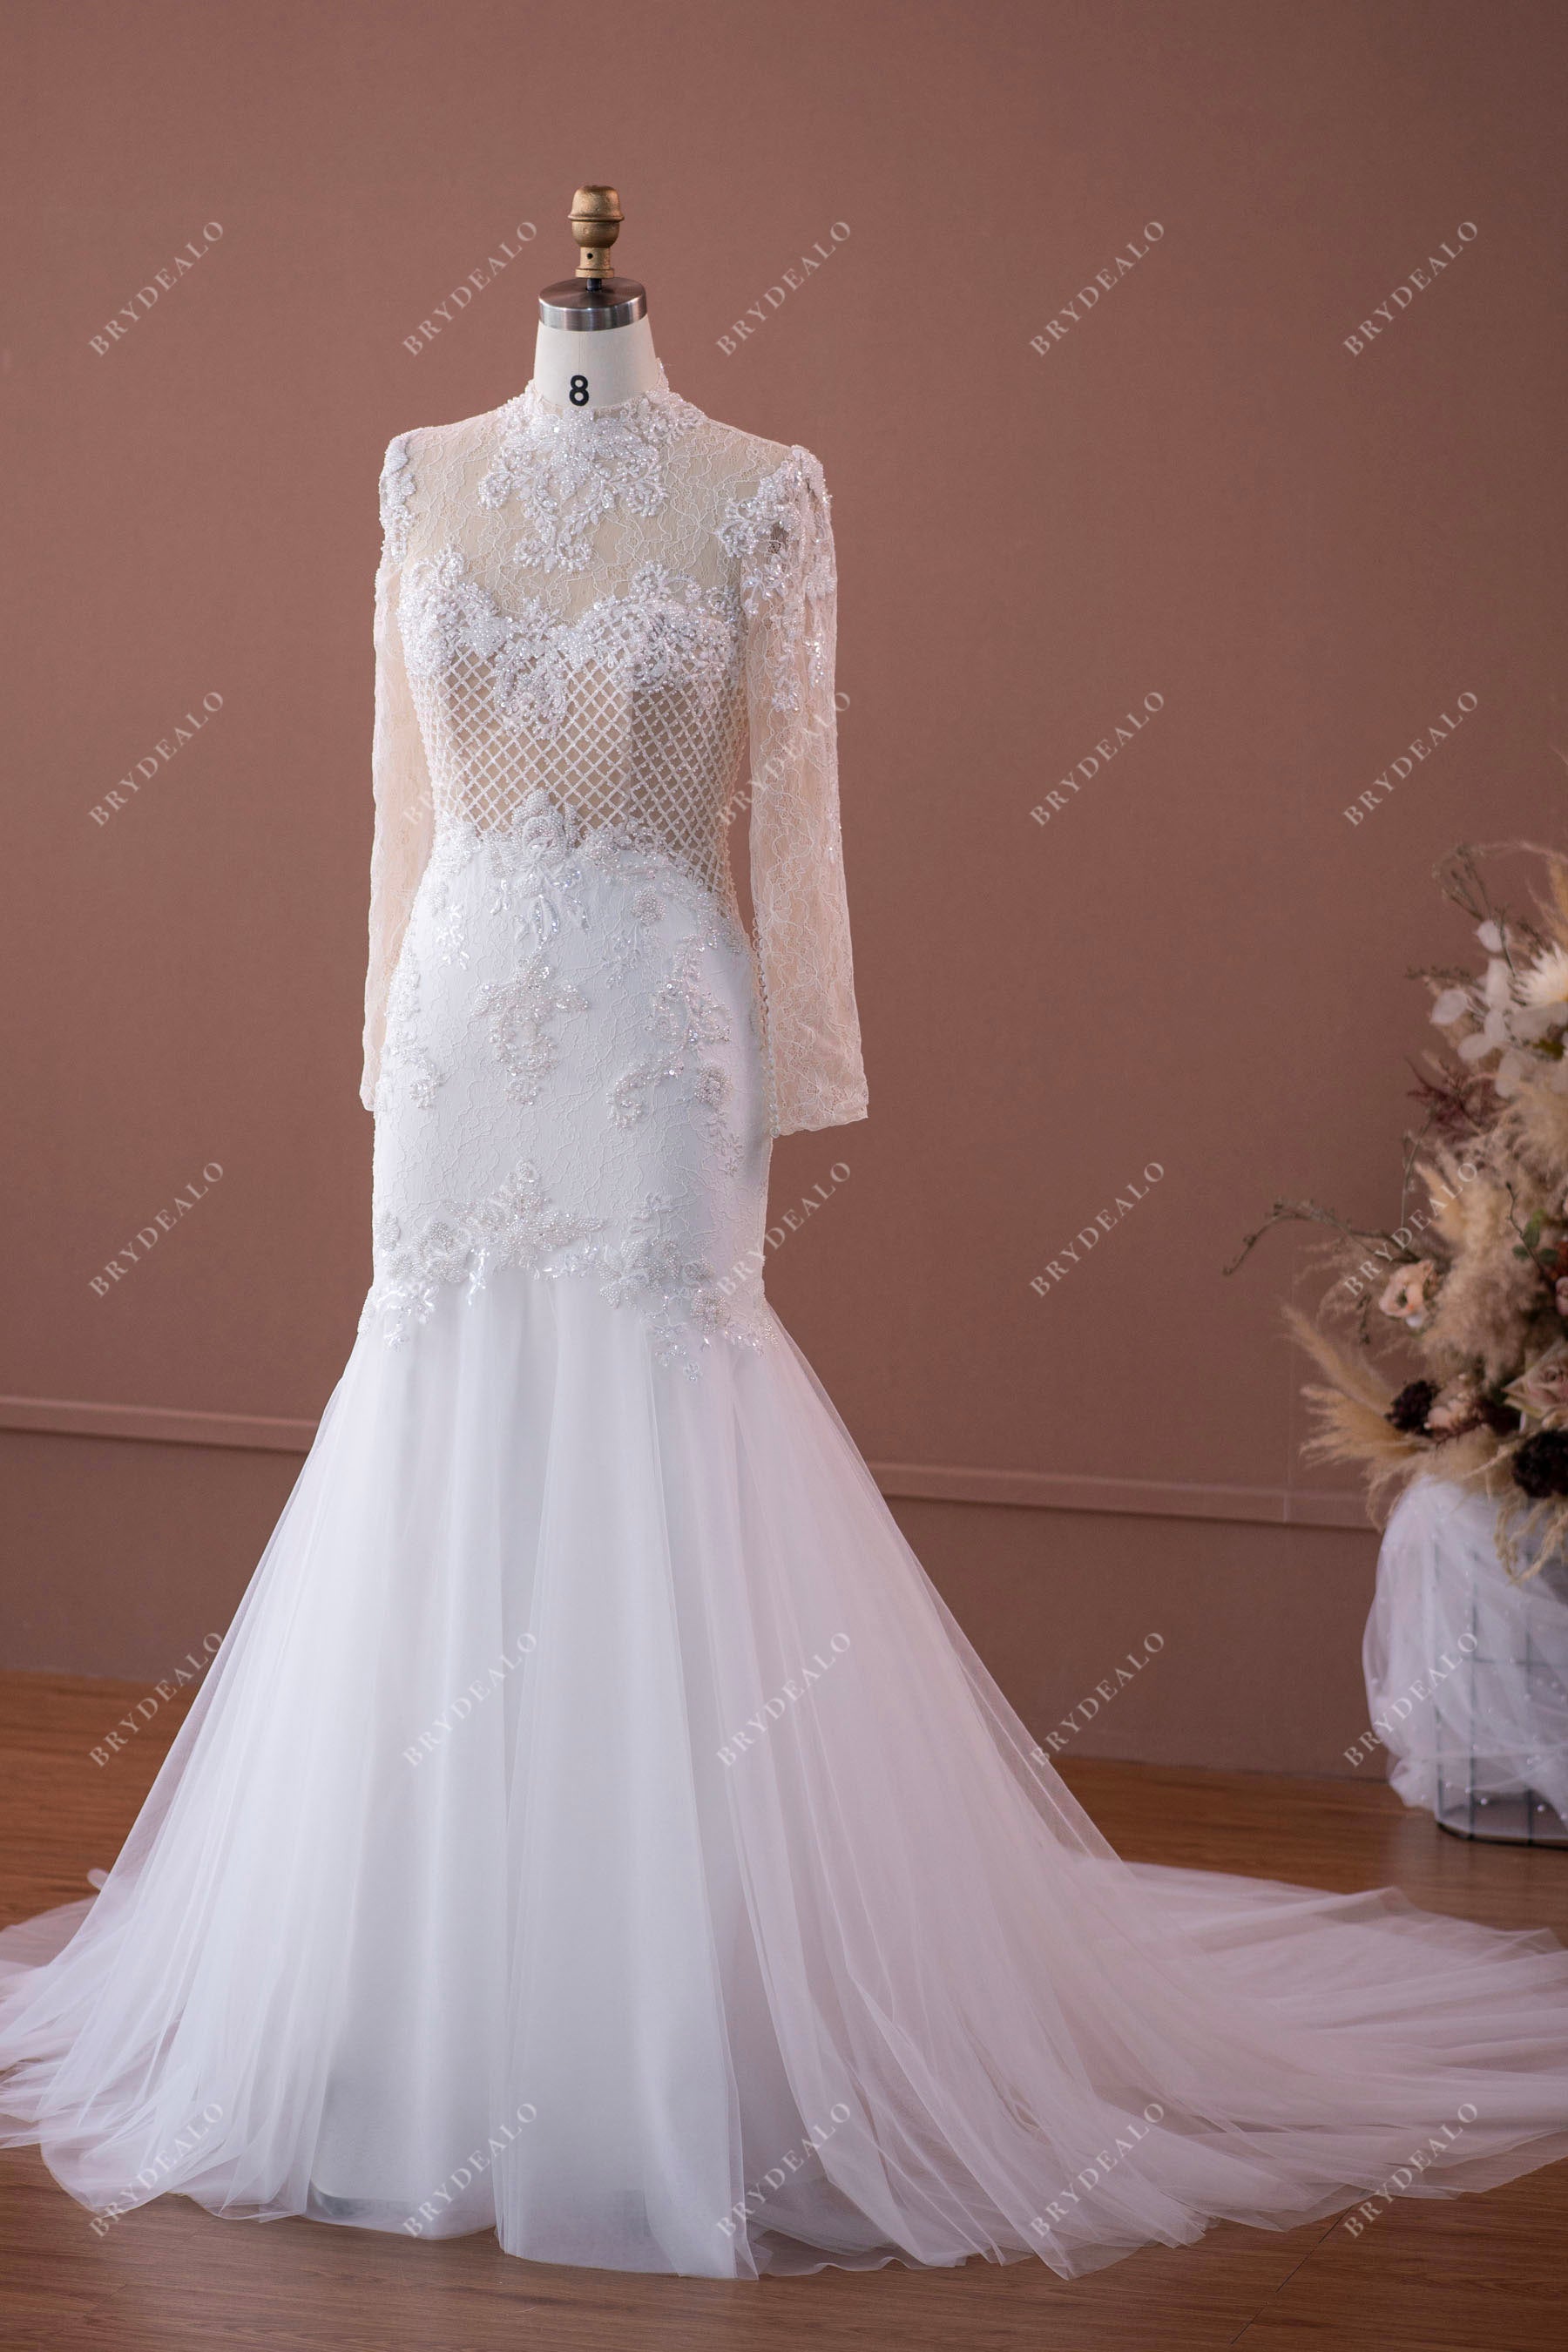 stylish high neck illusion royal wedding dress